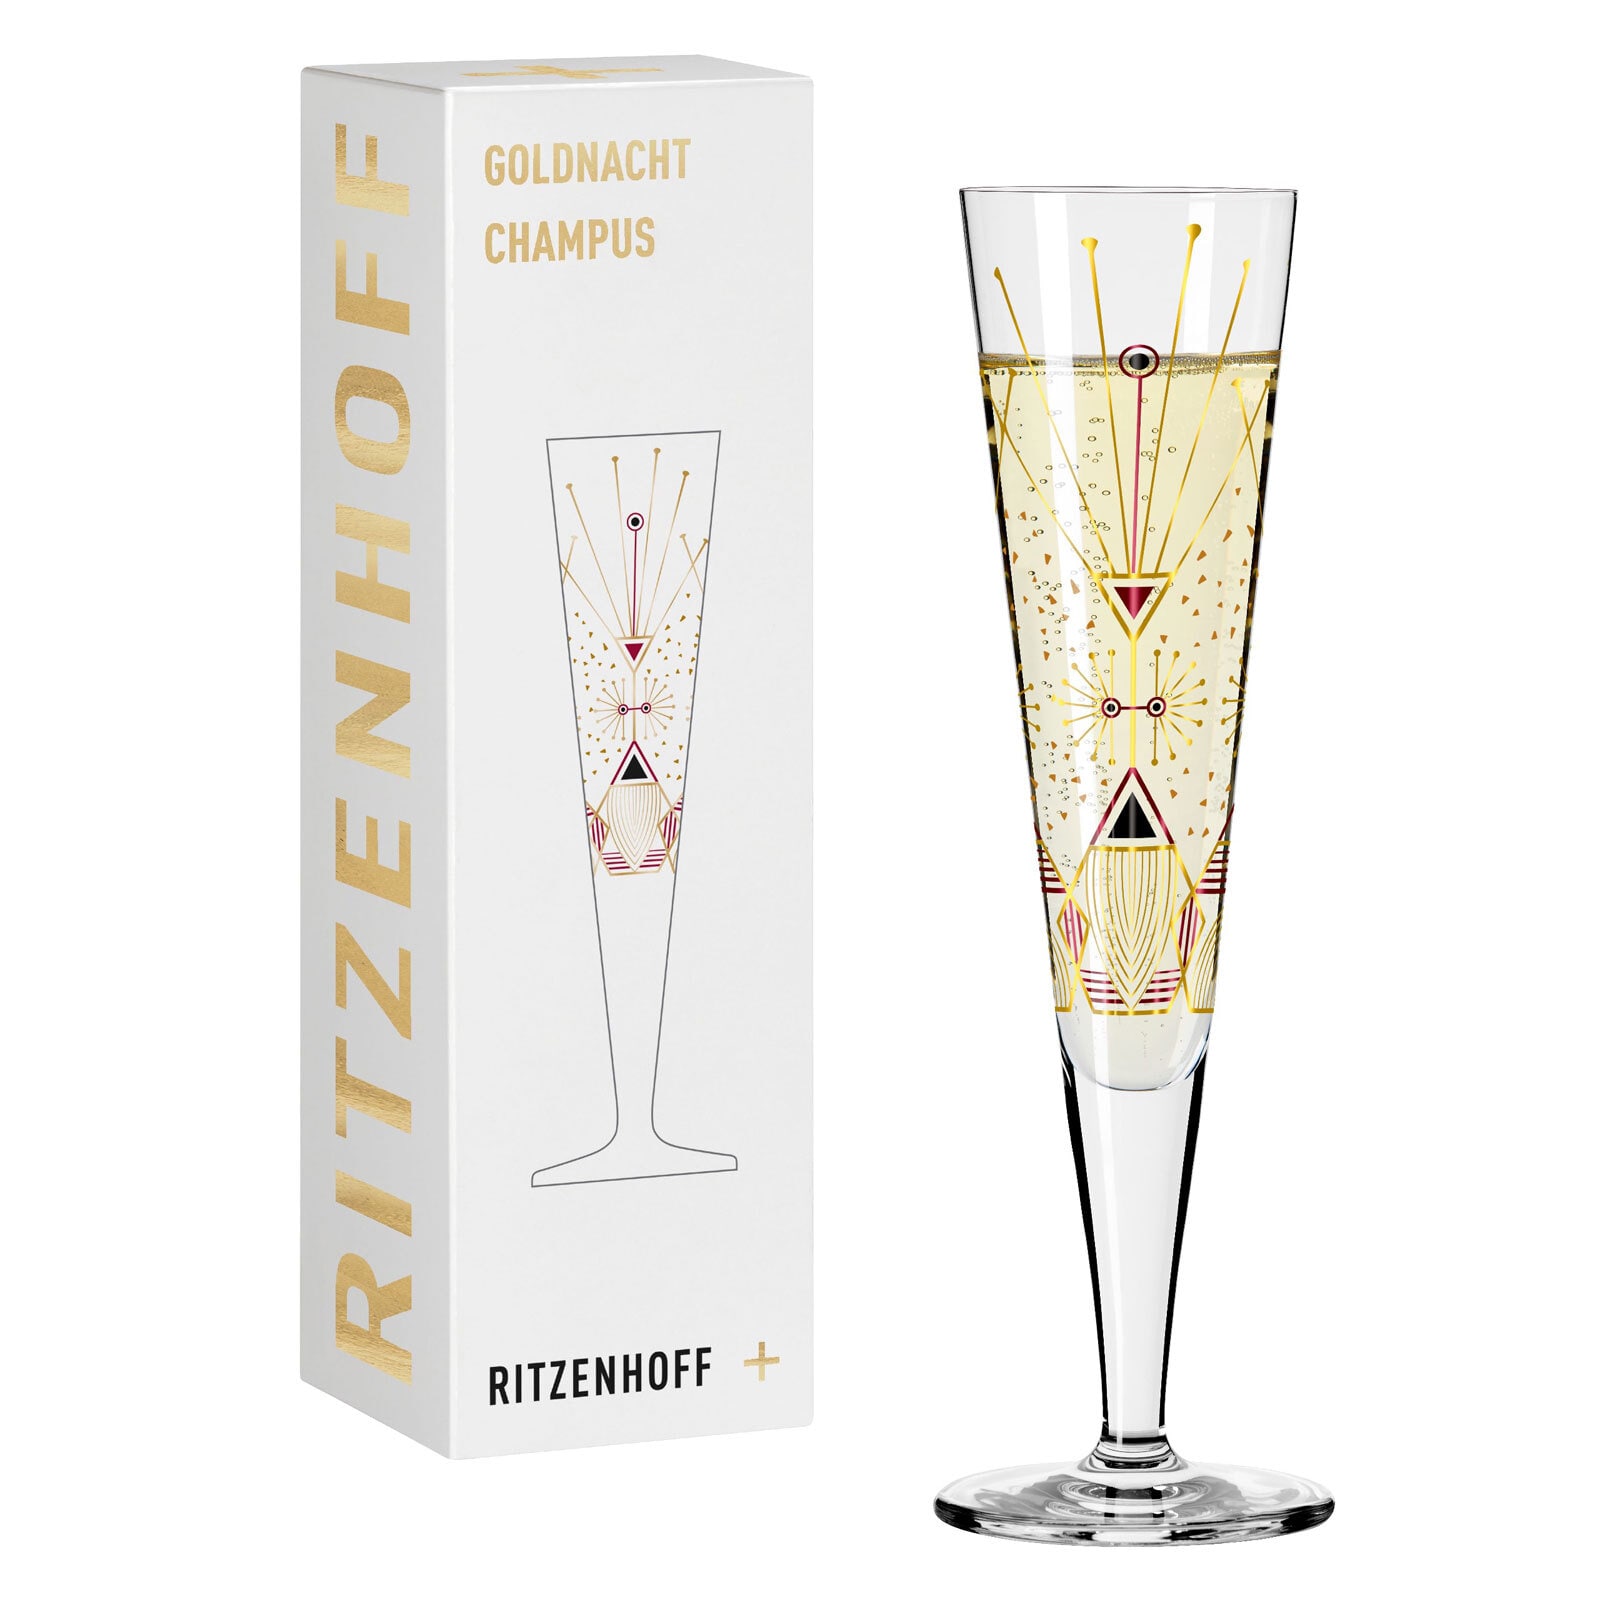 RITZENHOFF Champagnerglas GOLDNACHT I W. BOHR